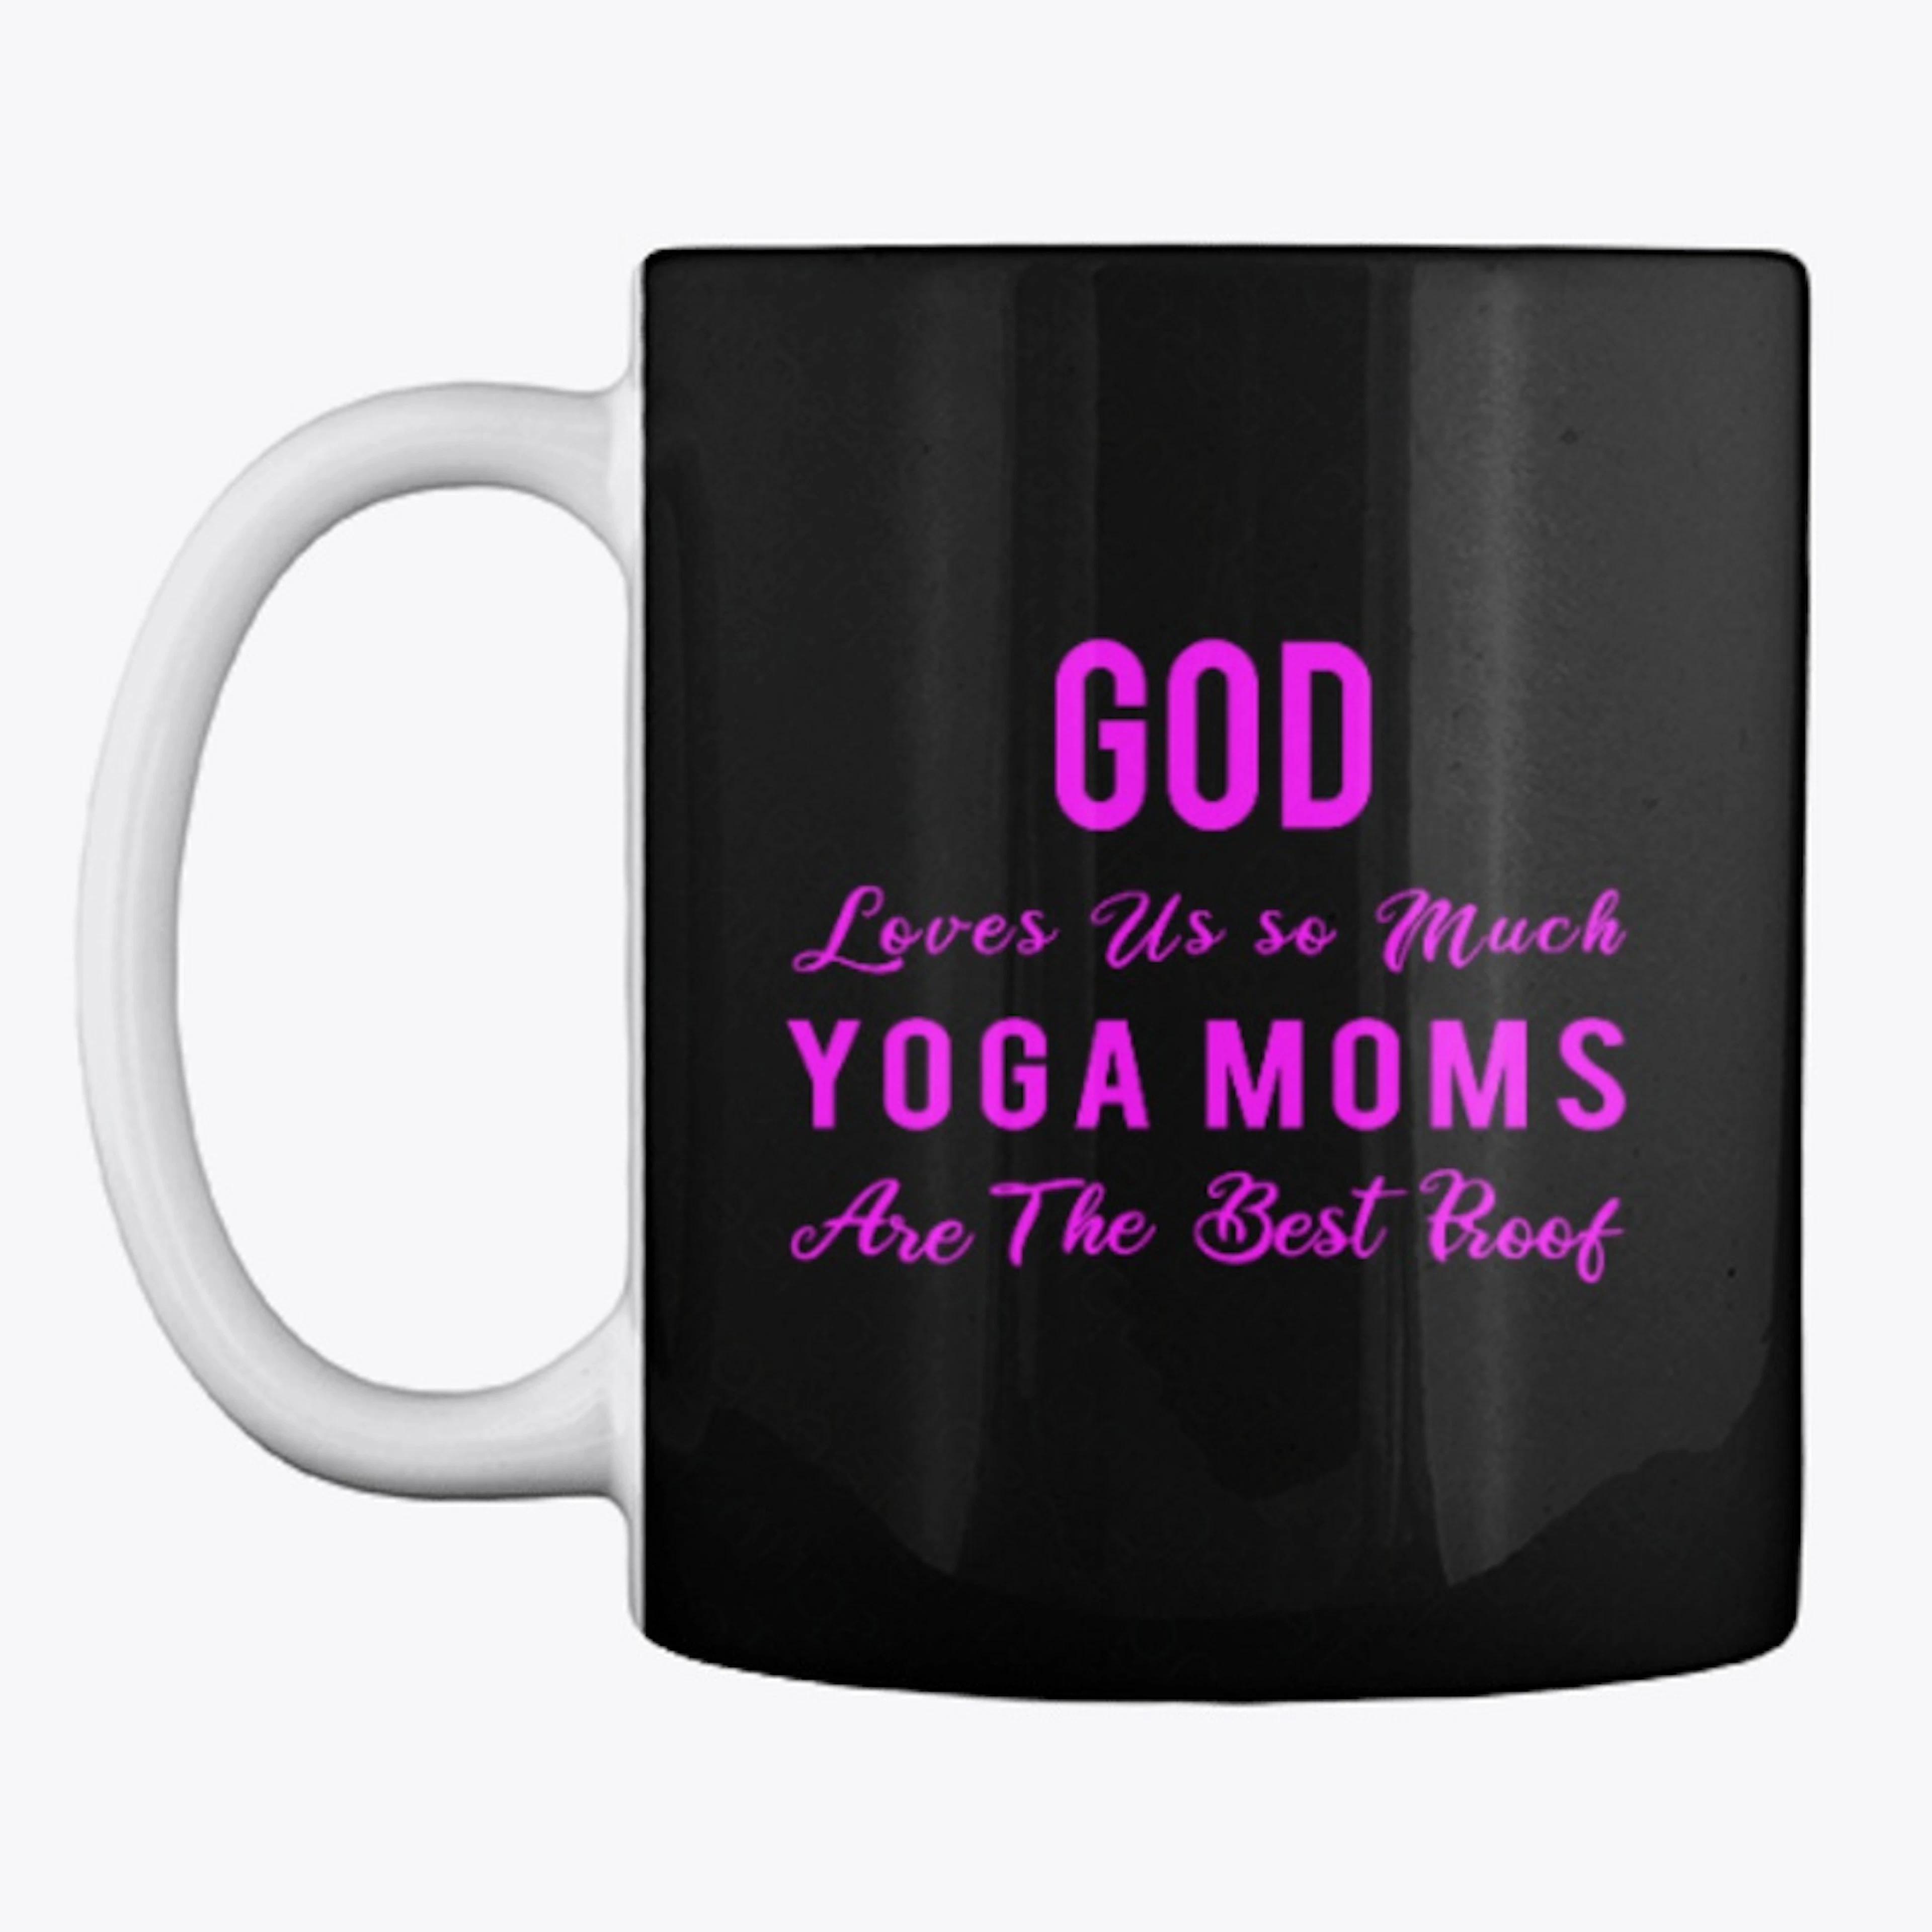 God loves yoga moms coffee mug 